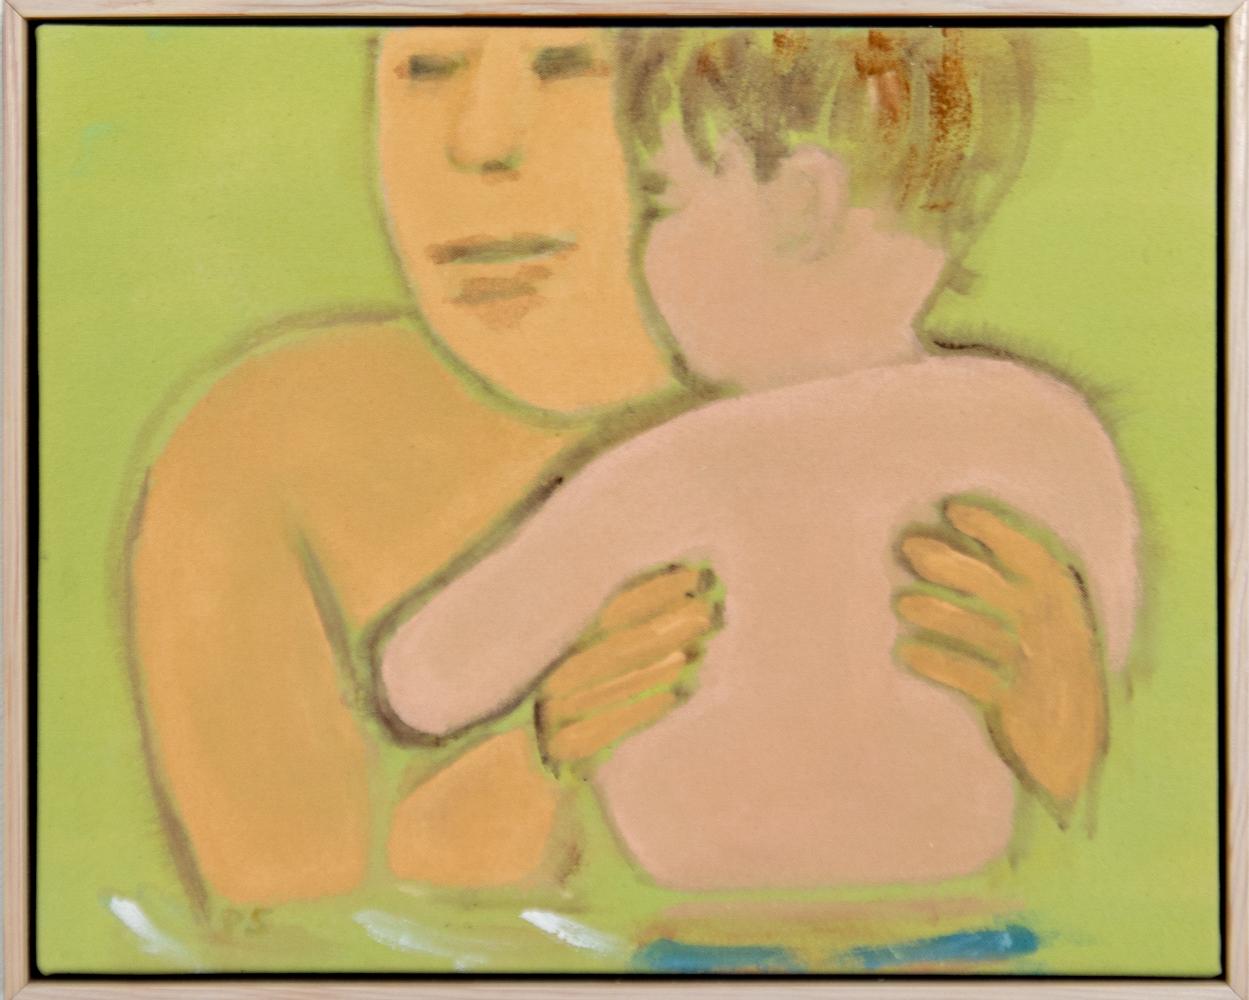 Vater und Sohn – farbenfrohes, ausdrucksstarkes, abstrahiertes figuratives Gemälde, Acryl auf Leinwand